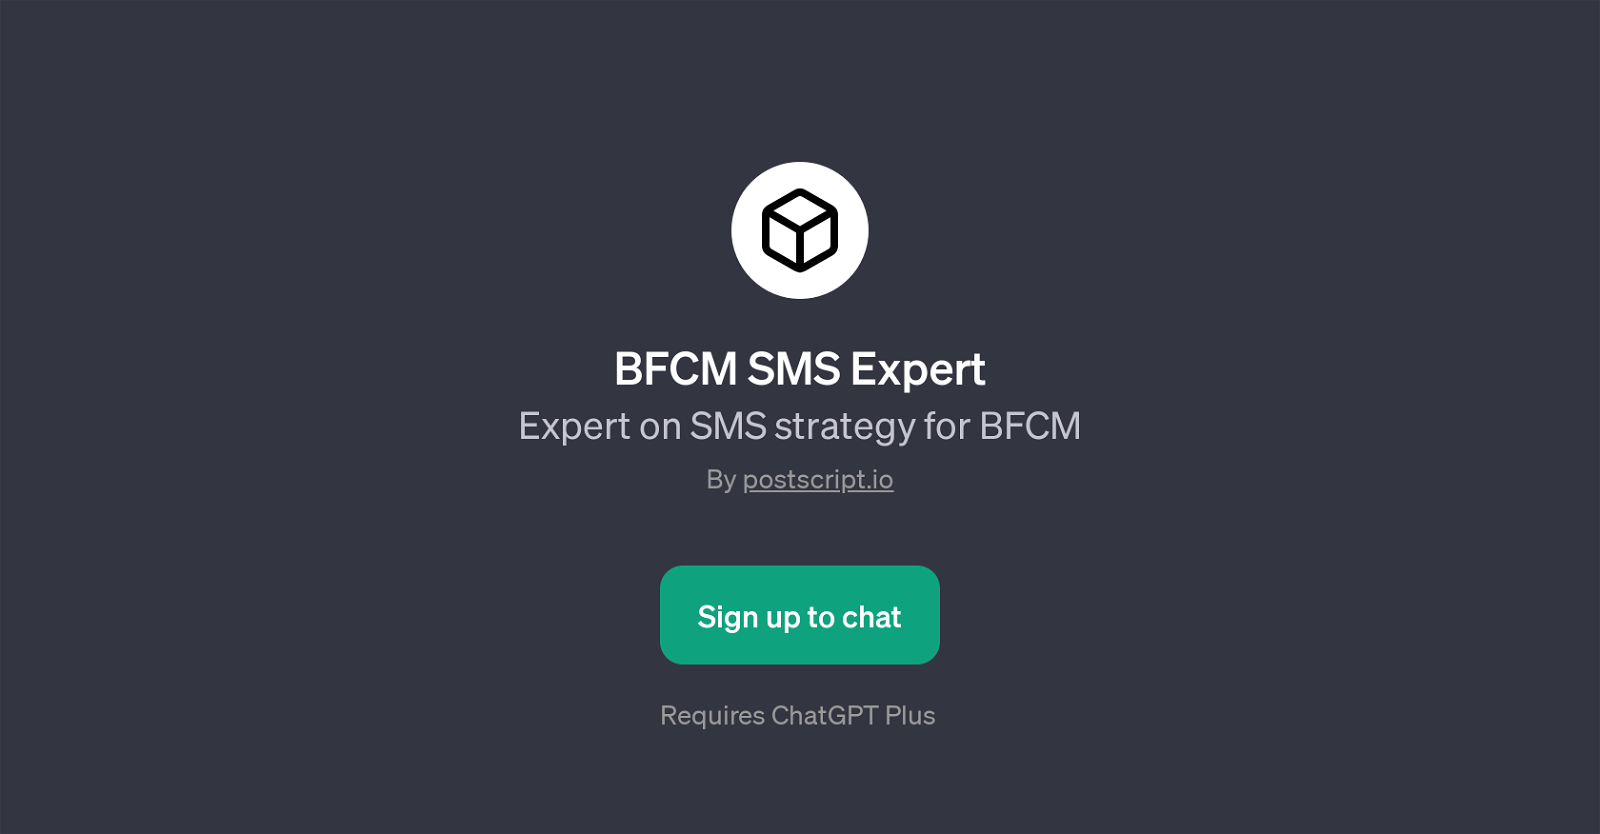 BFCM SMS Expert website